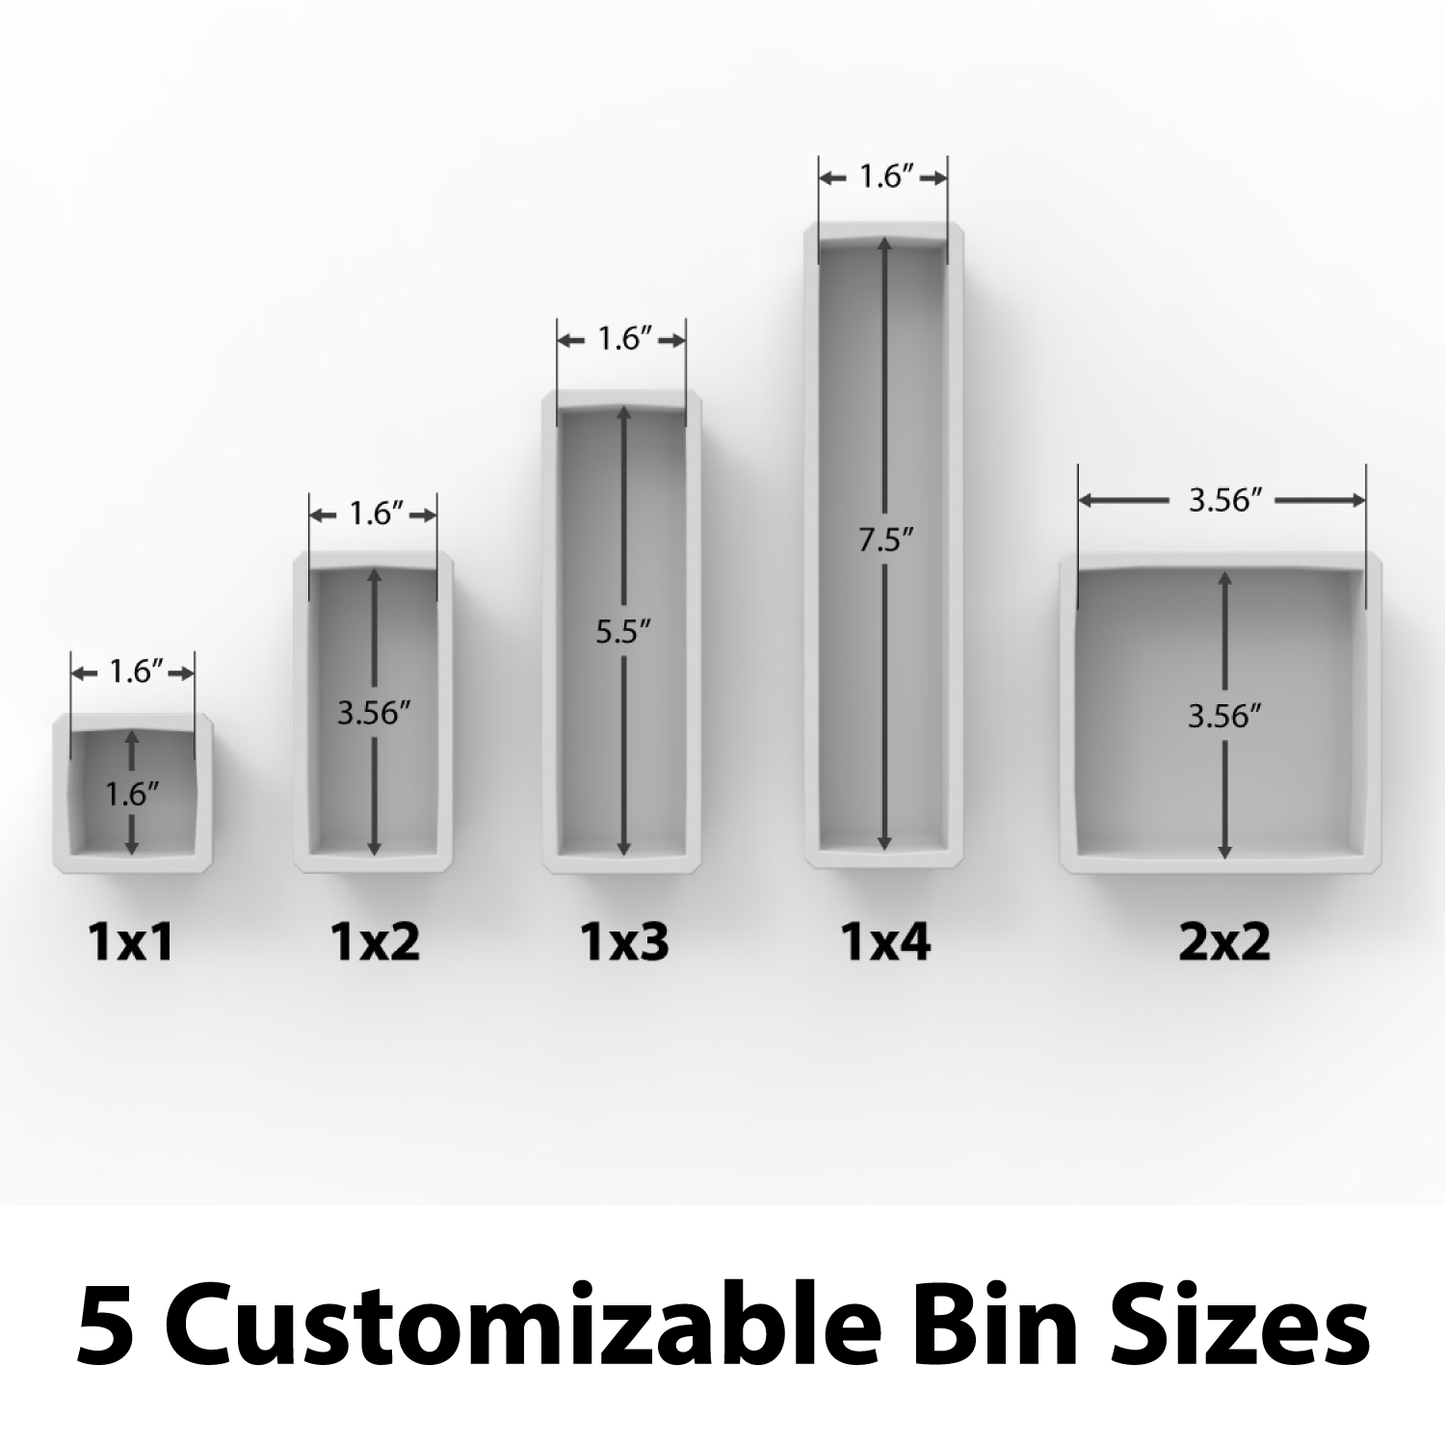 6 Customizable 1x1 Bins (1.6" x 1.6")